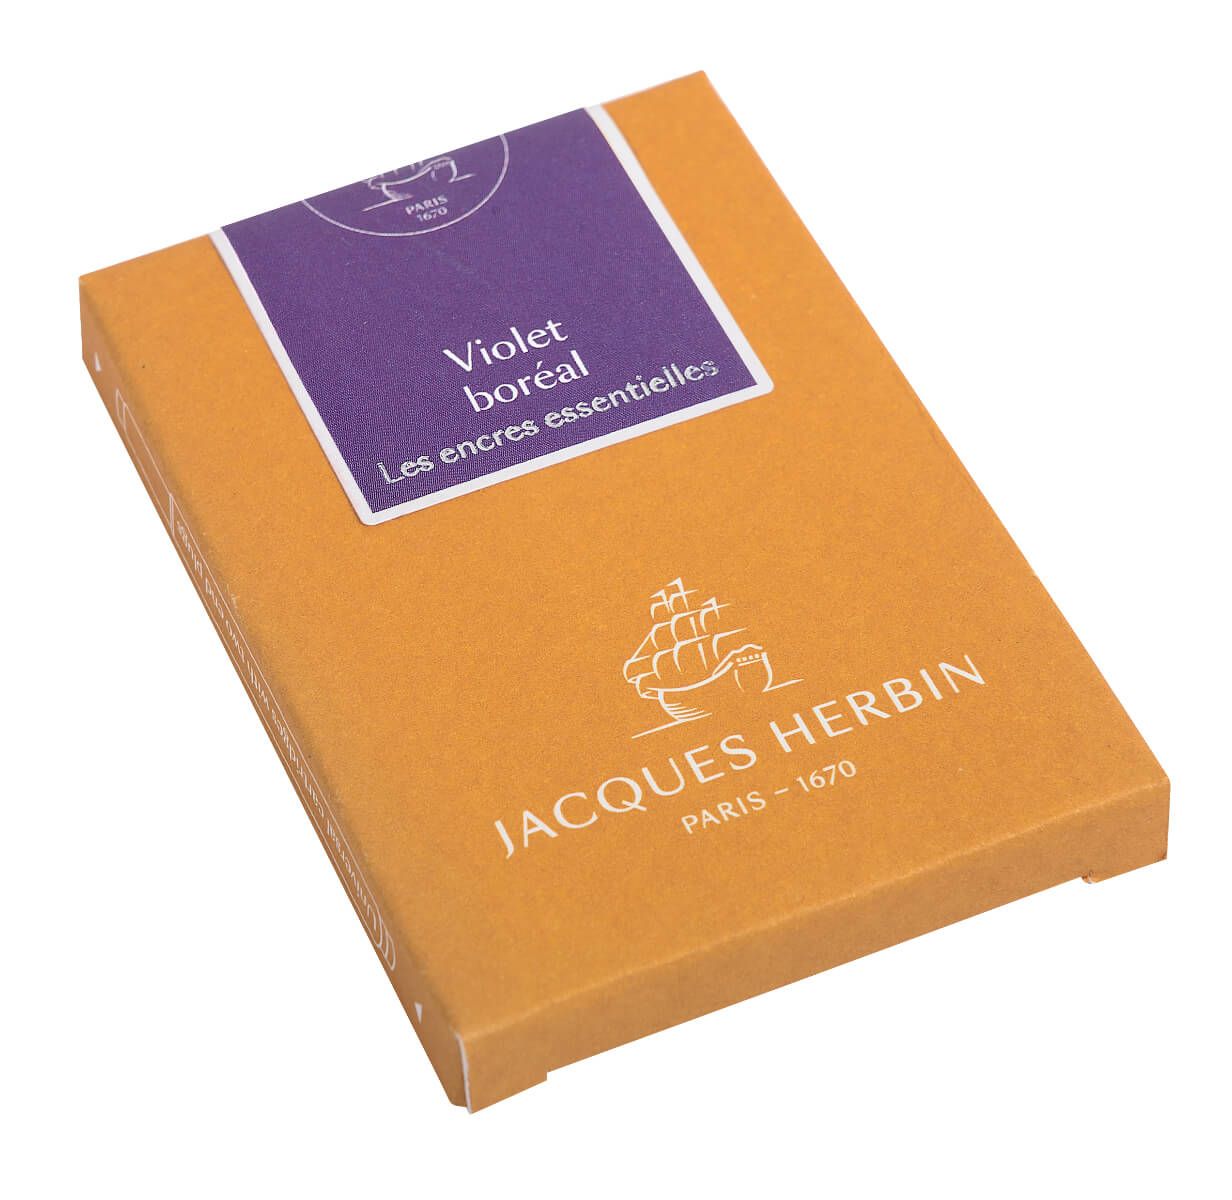 Jacques Herbin Essential Violet Boreal